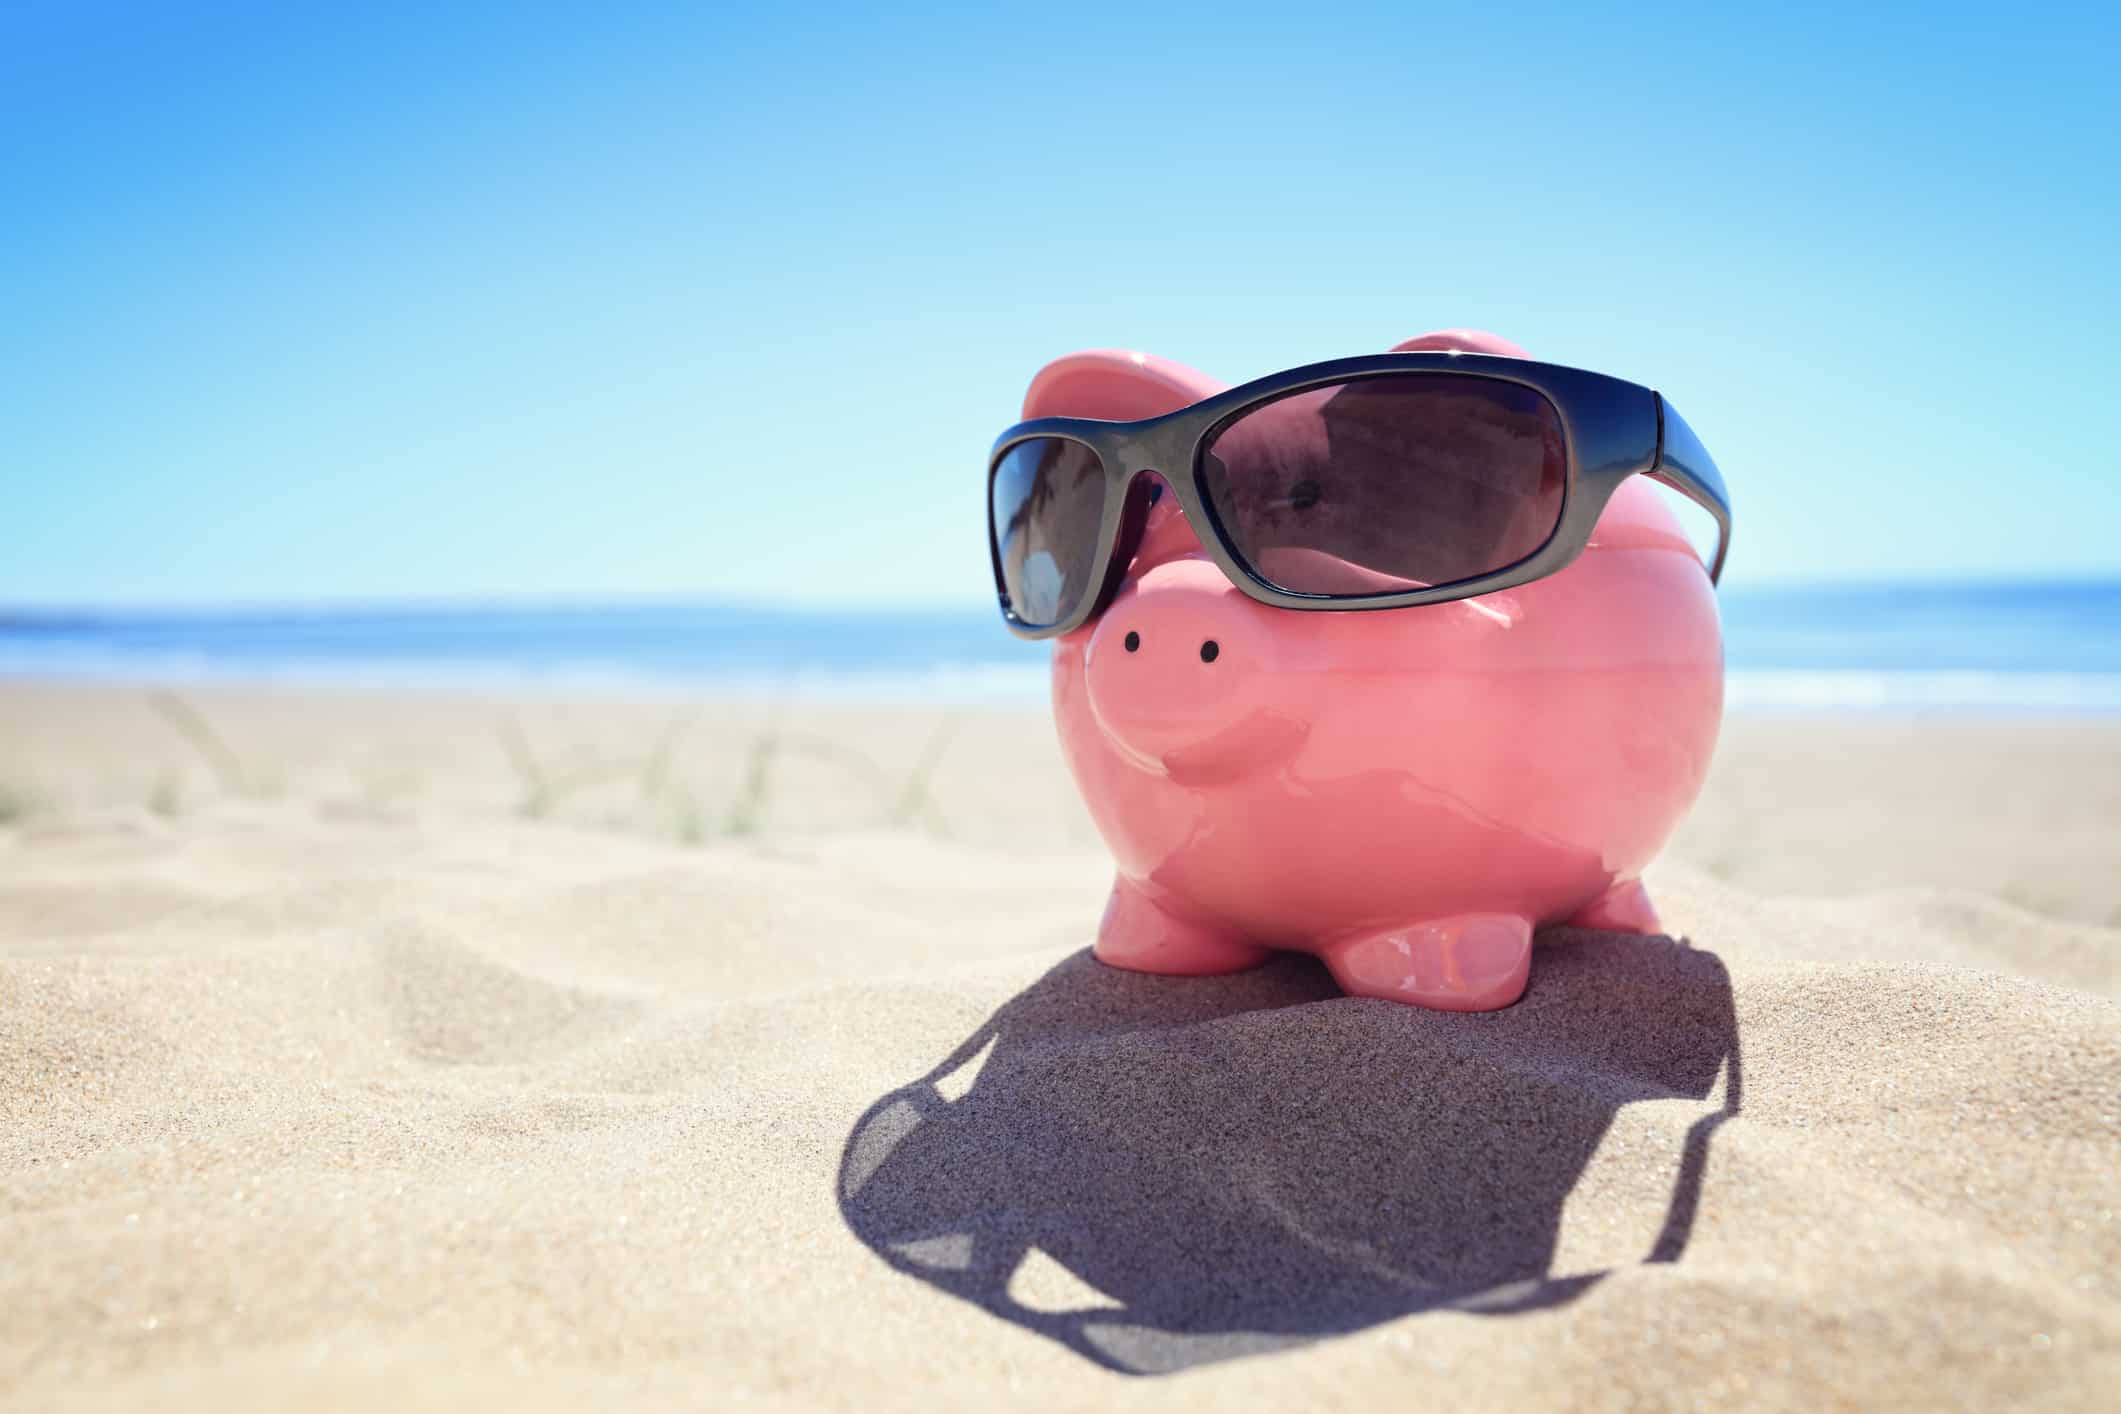 A piggy bank wearing sunglasses, at the beach.